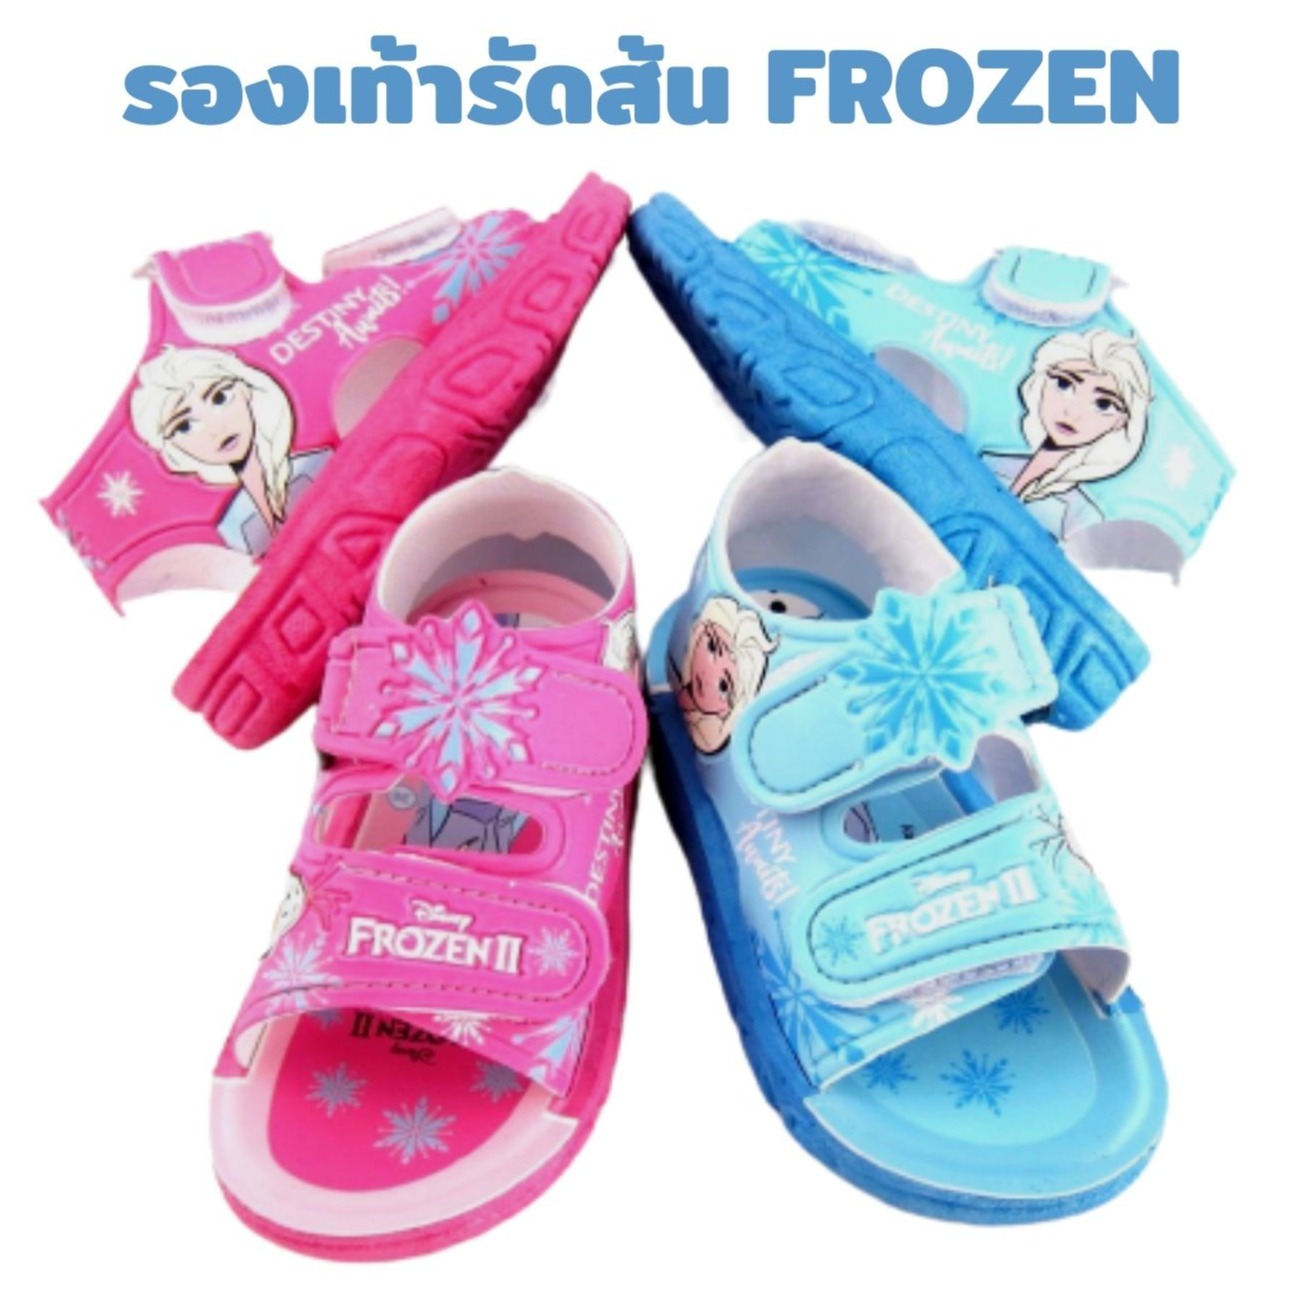 Sustainable รองเท้าแตะรัดส้นเด็ก Frozen รองเท้ารัดส้นเด็ก รองเท้าเด็ก รองเท้าเจ้าหญิง รองเท้ารัดส้น รองเท้าเอลซ่า เอลซ่า เจ้าหญิง